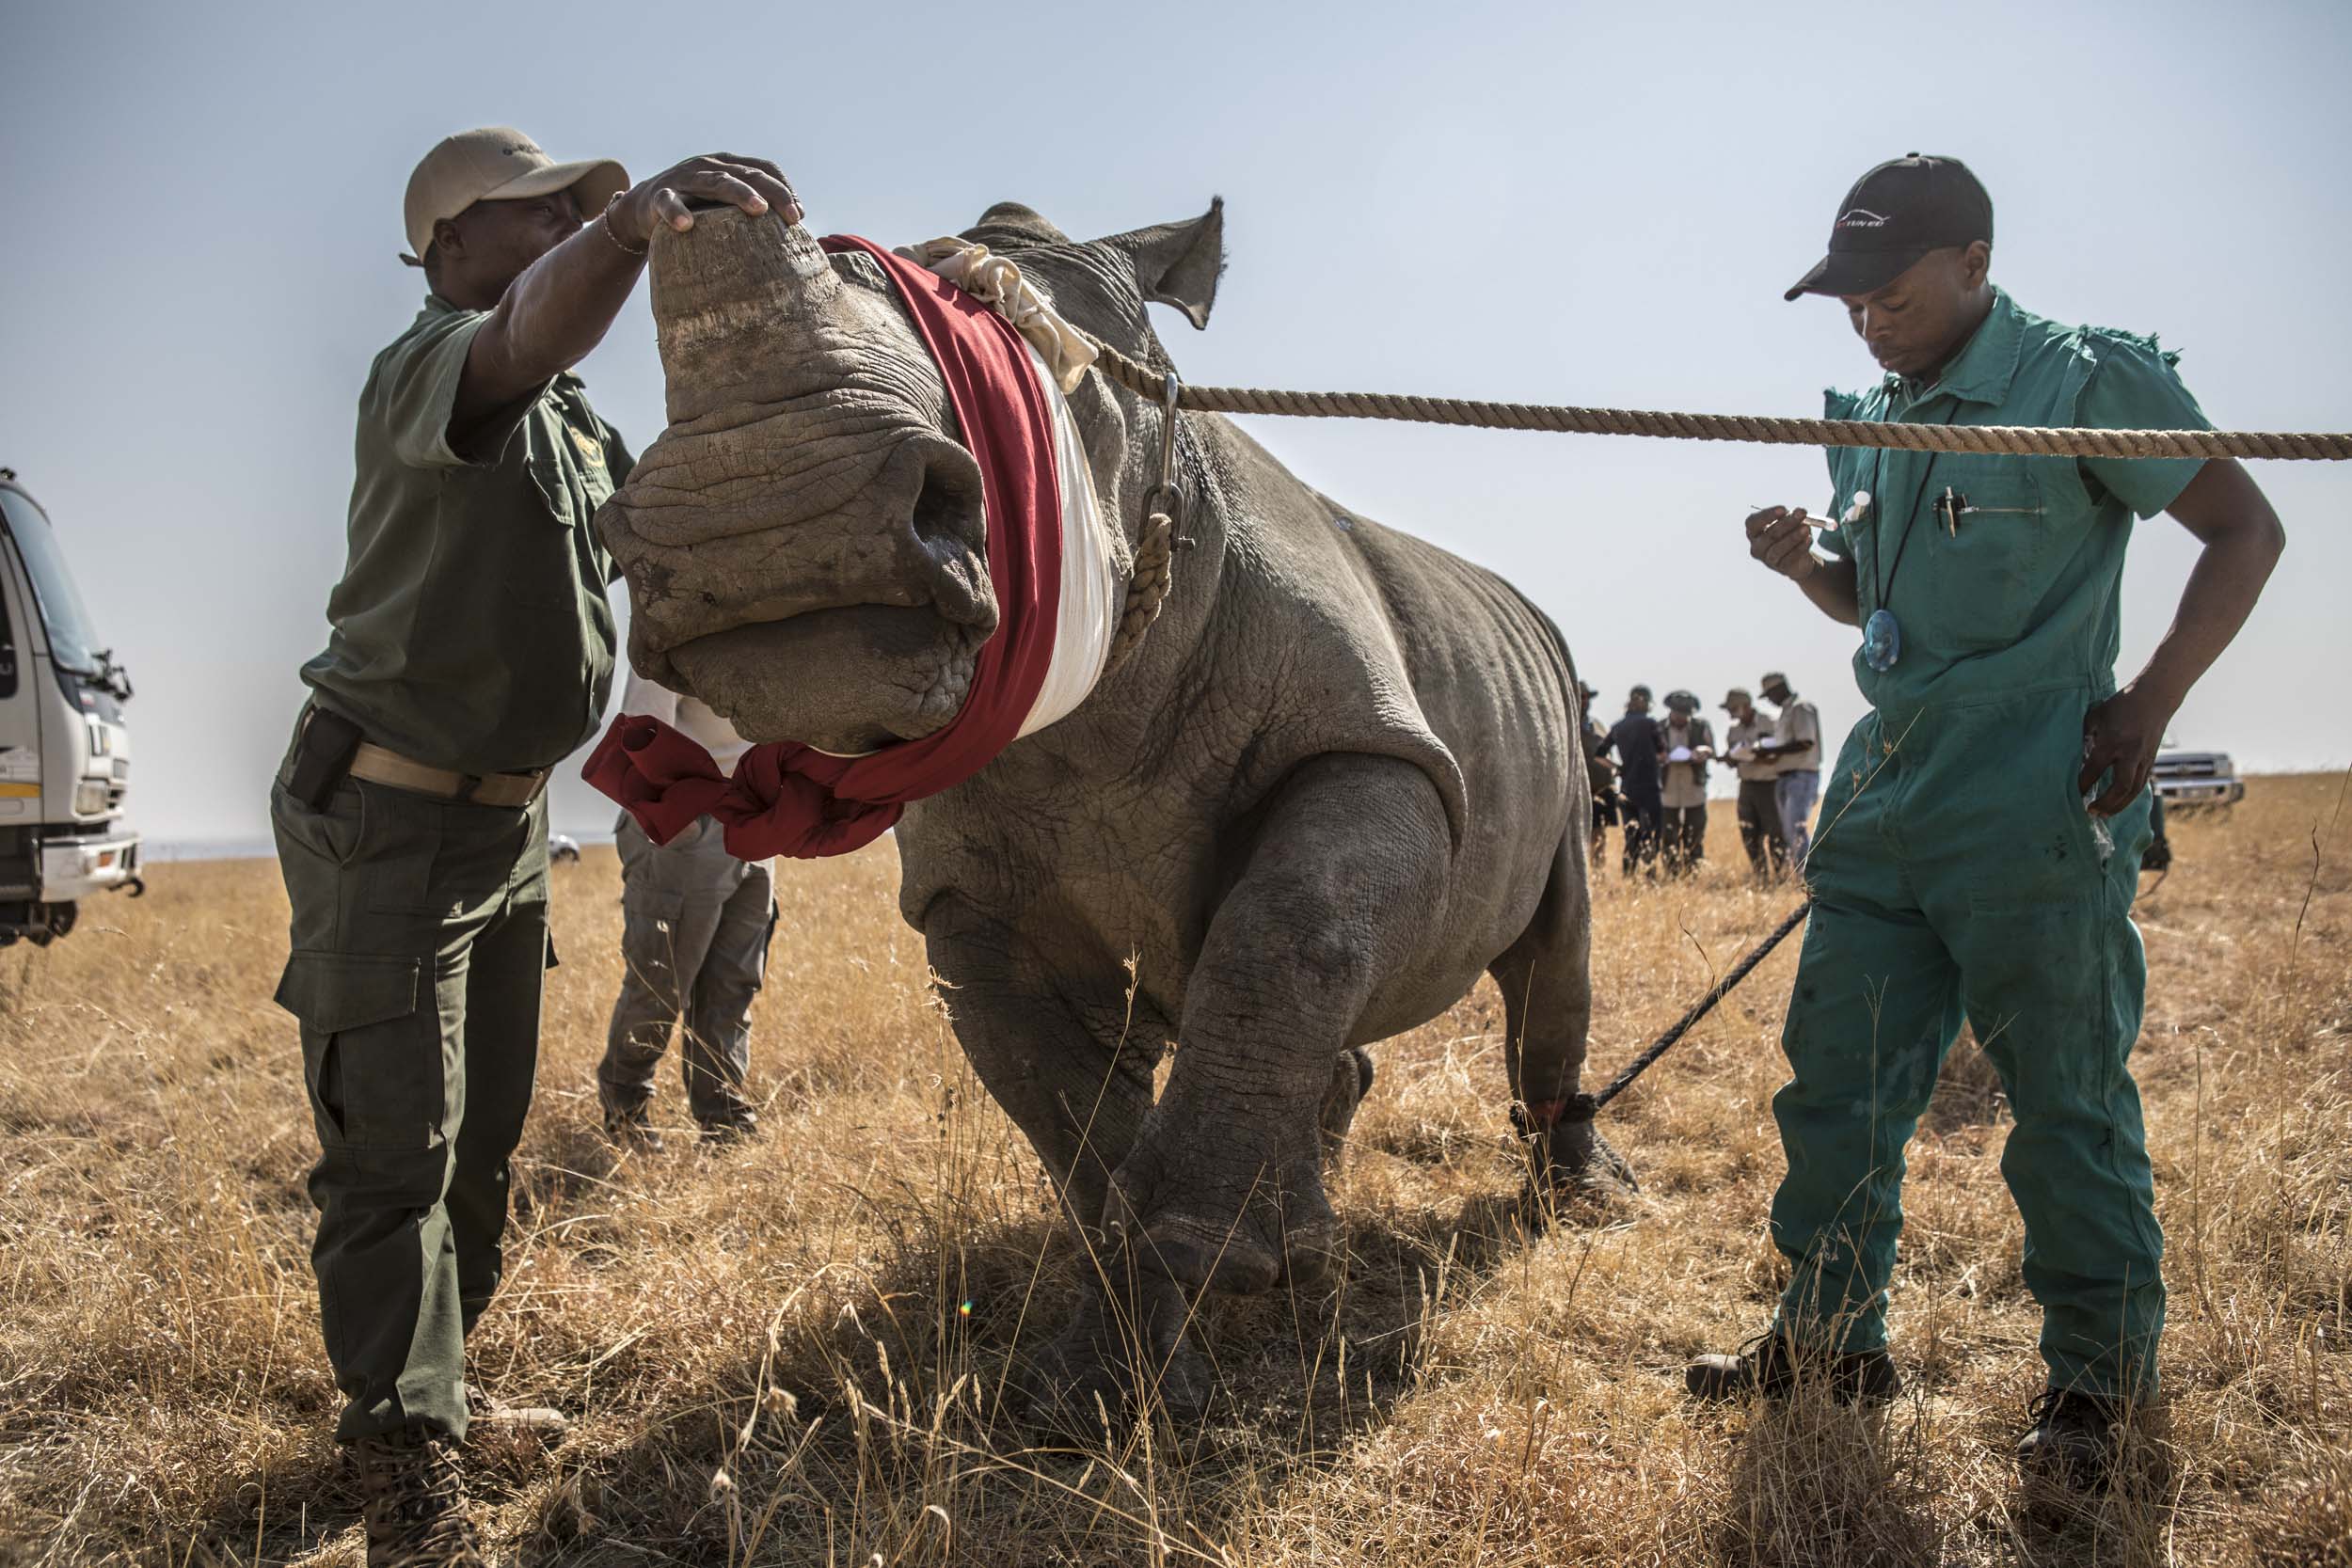 Rhino conservation 